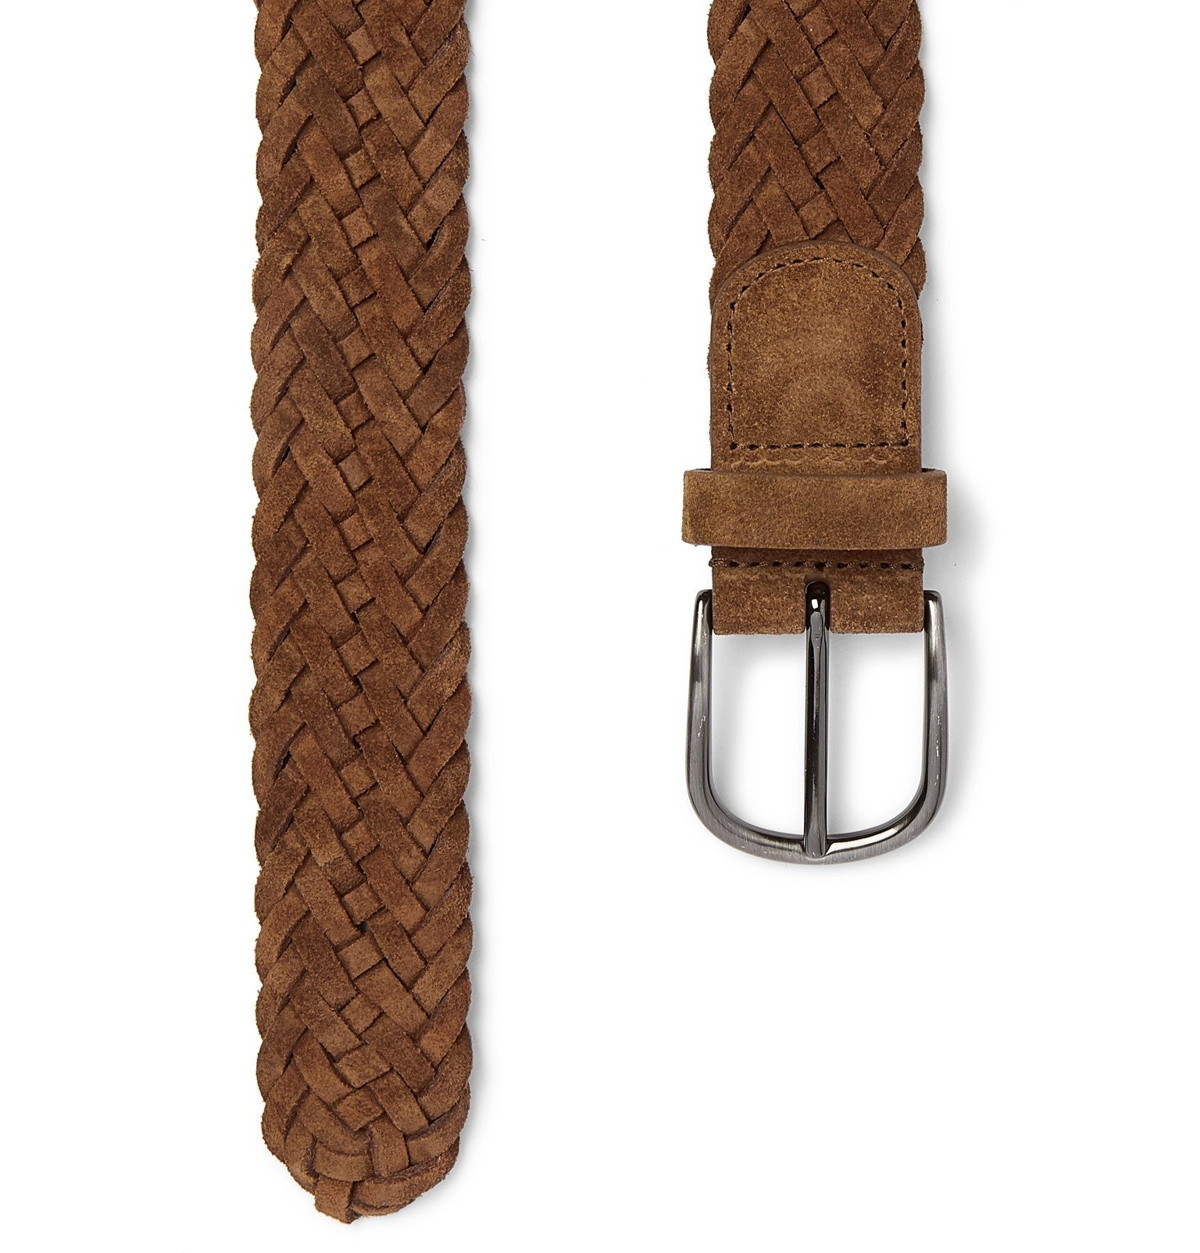 Anderson's Plain Leather Woven Belt